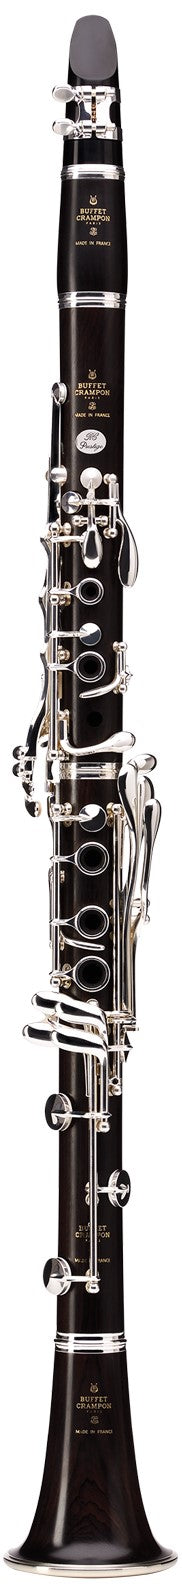 Buffet Crampon RC PRESTIGE Bb Clarinet, Silver plated keys